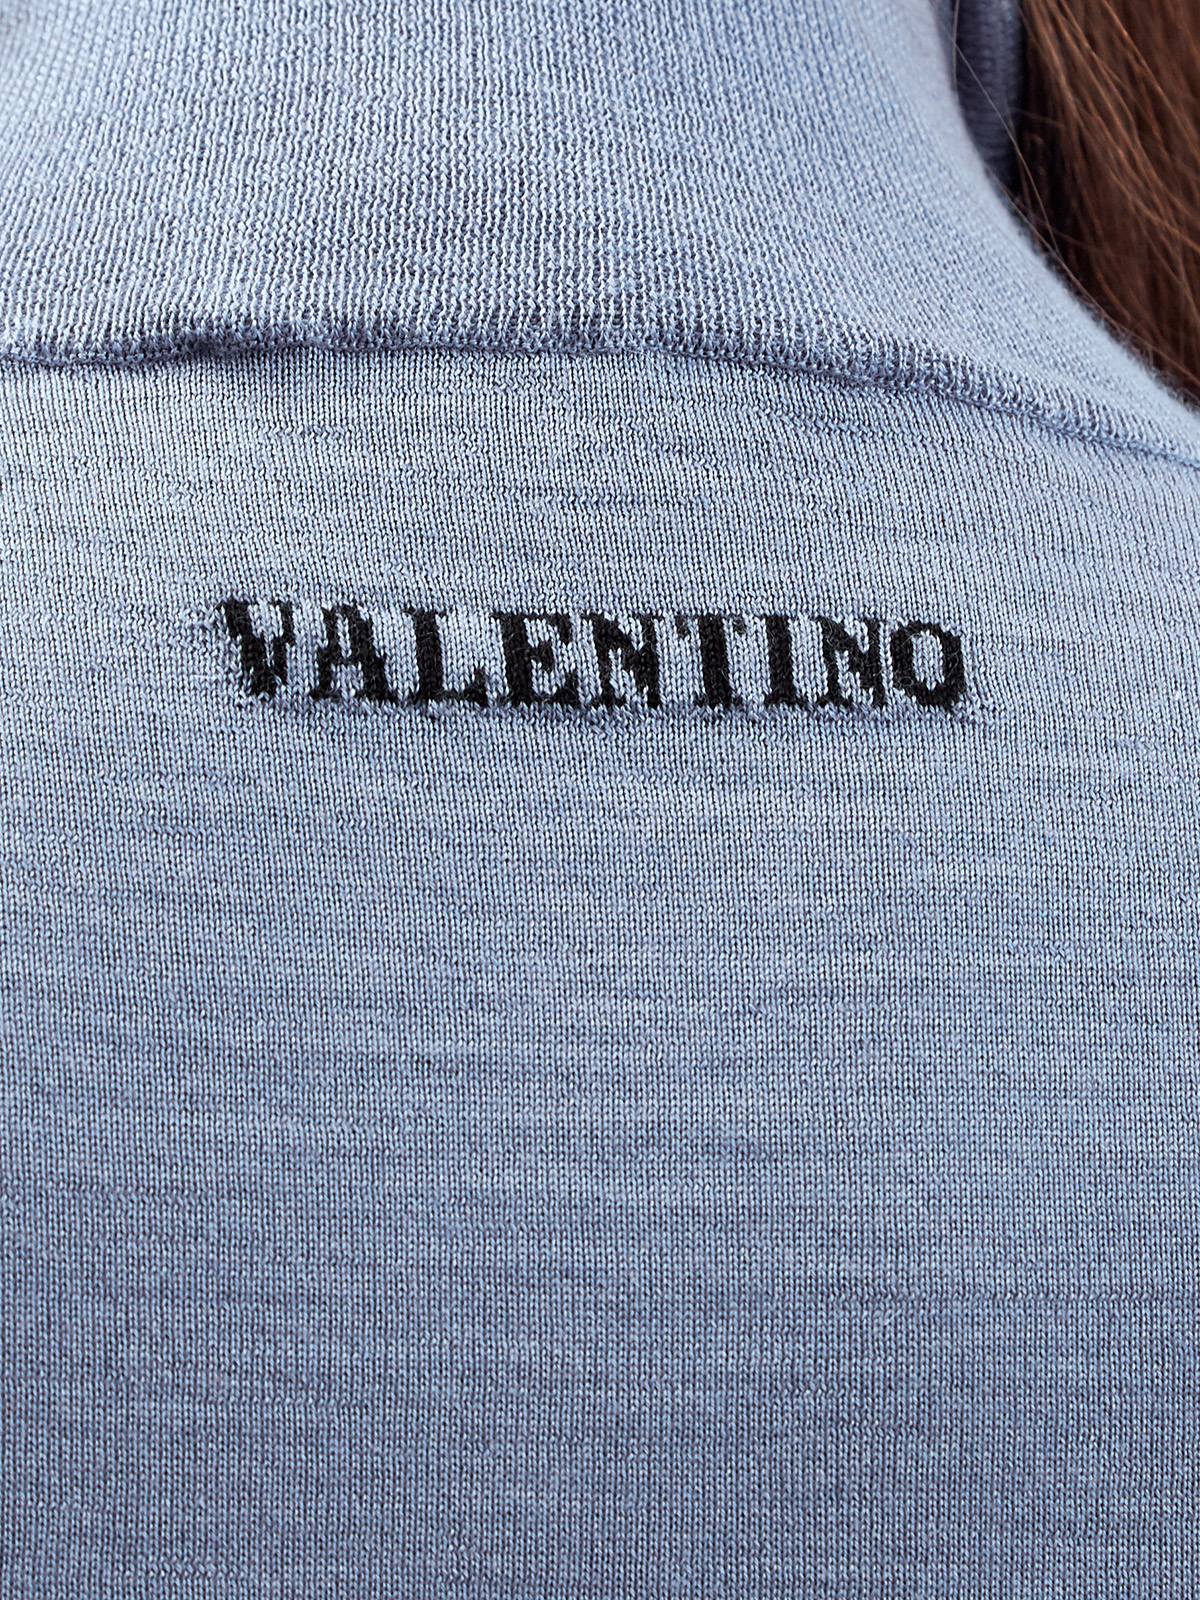 Водолазка из кашемира и шелка с жаккардовым логотипом VALENTINO, цвет голубой, размер 40;42;44 - фото 5